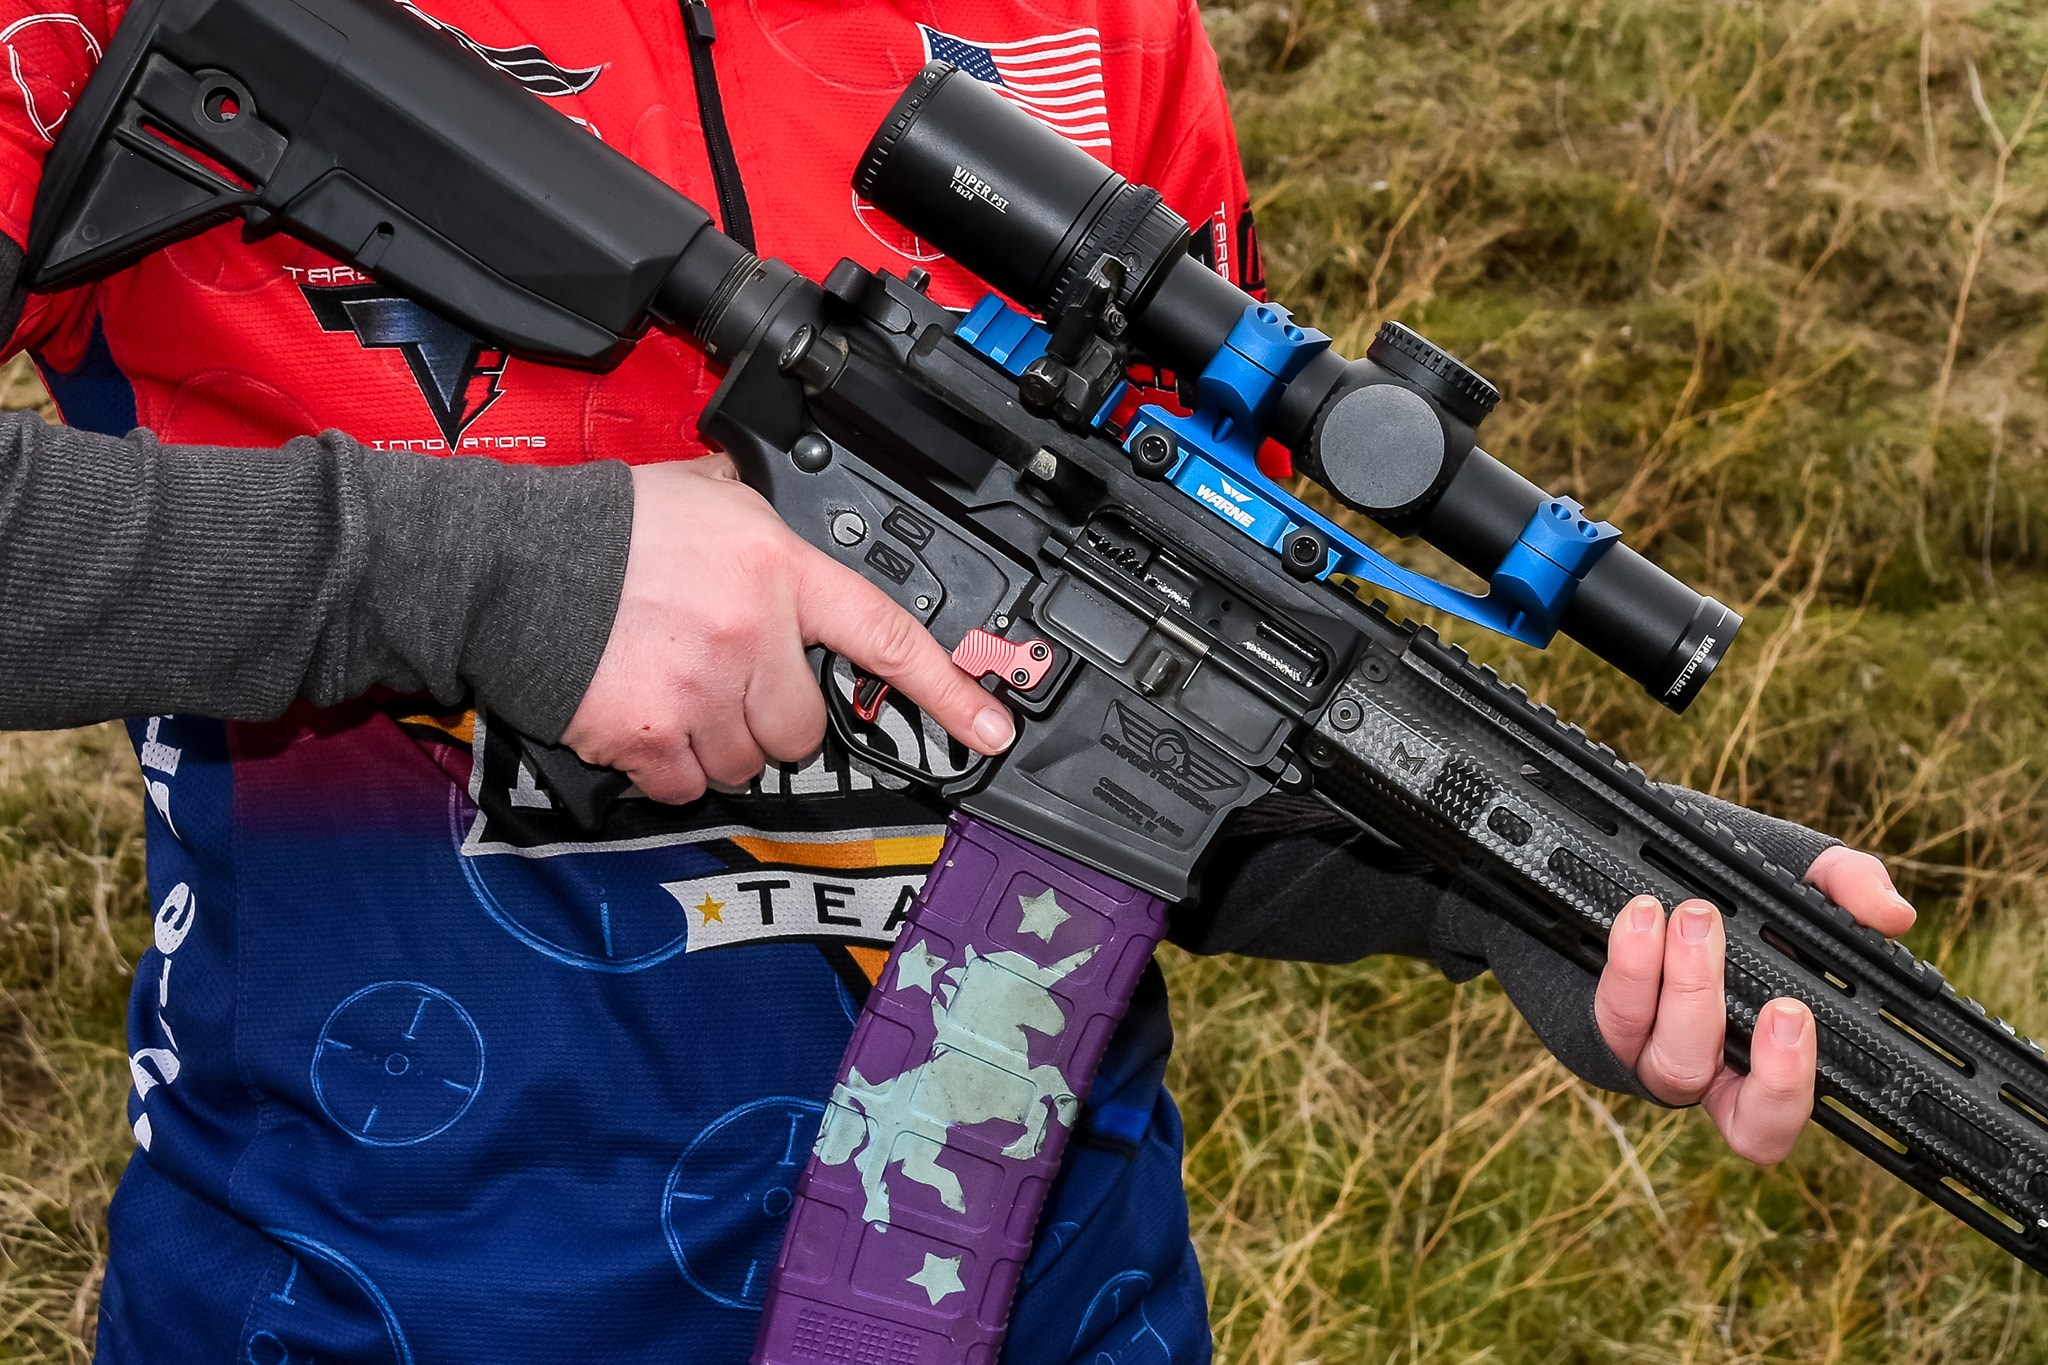 Scope Mount on Ar15 style rifle